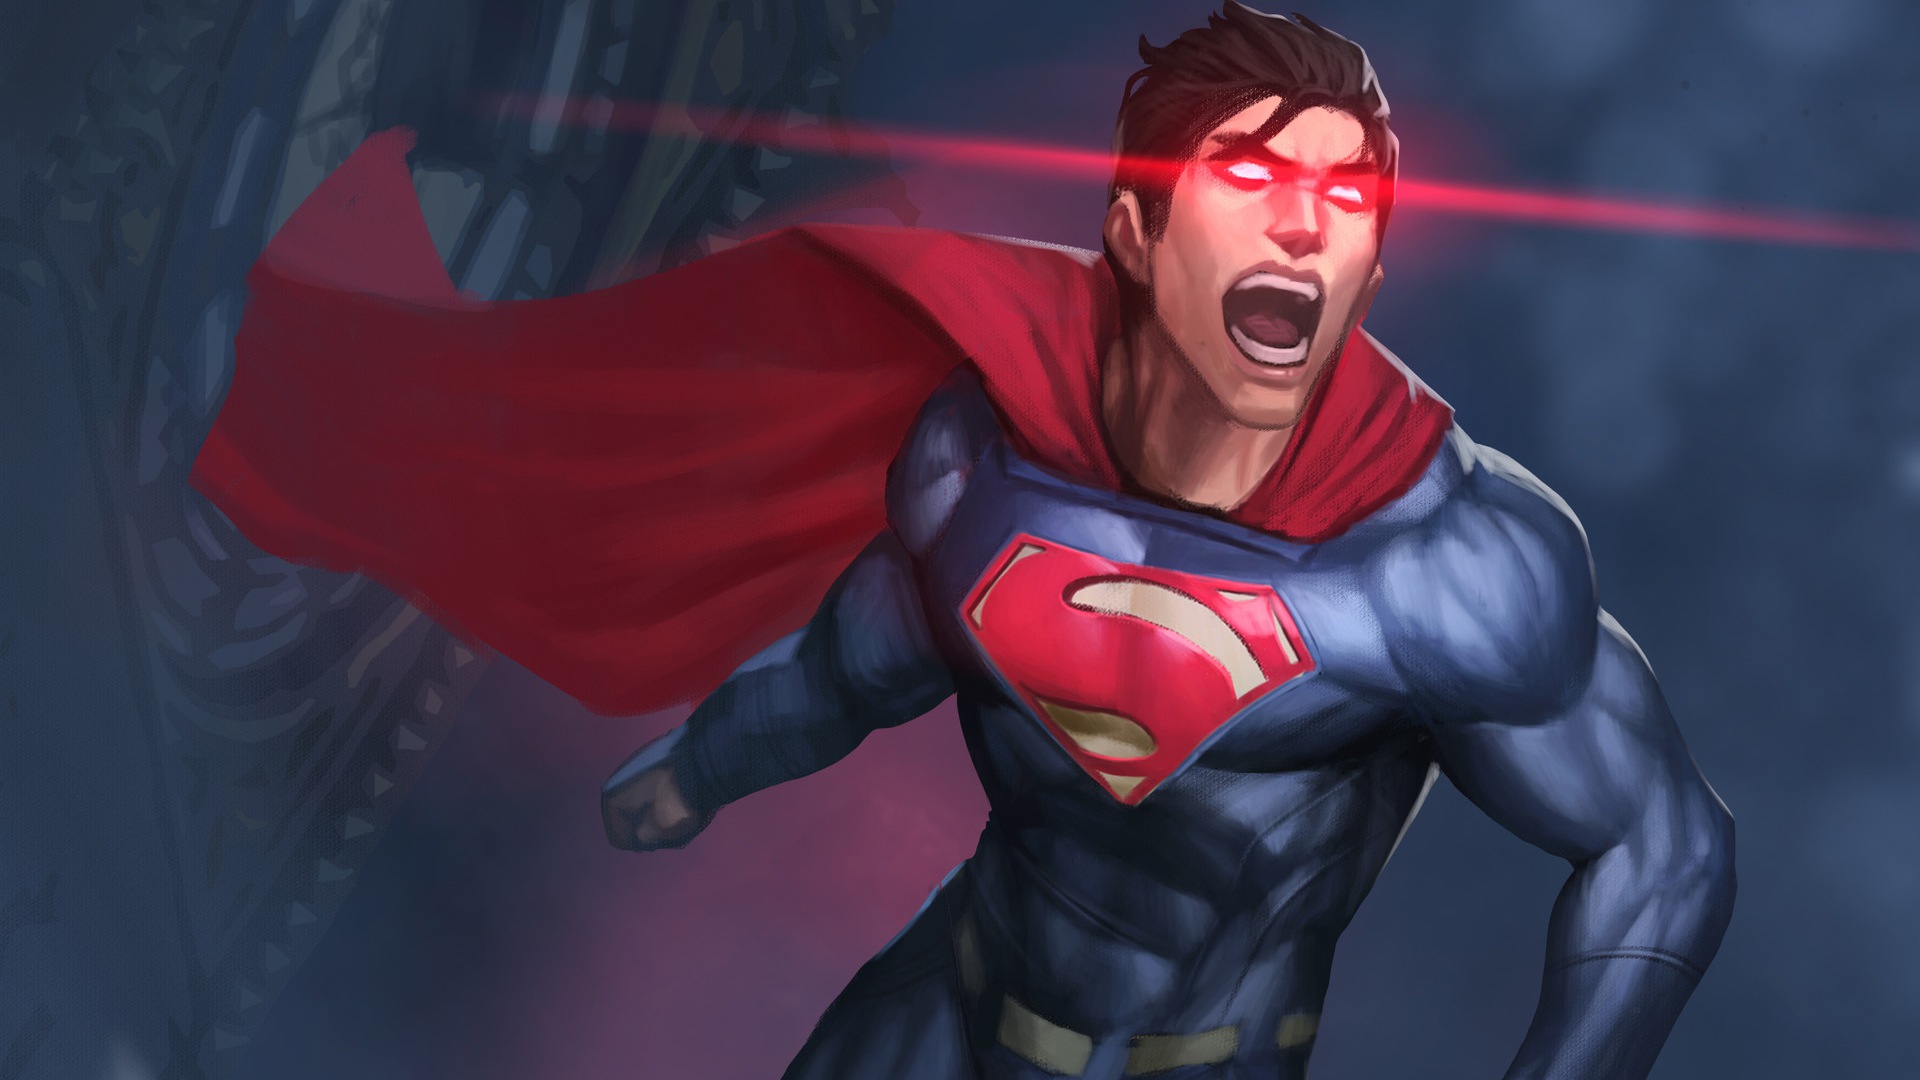 Superman HD Wallpaper